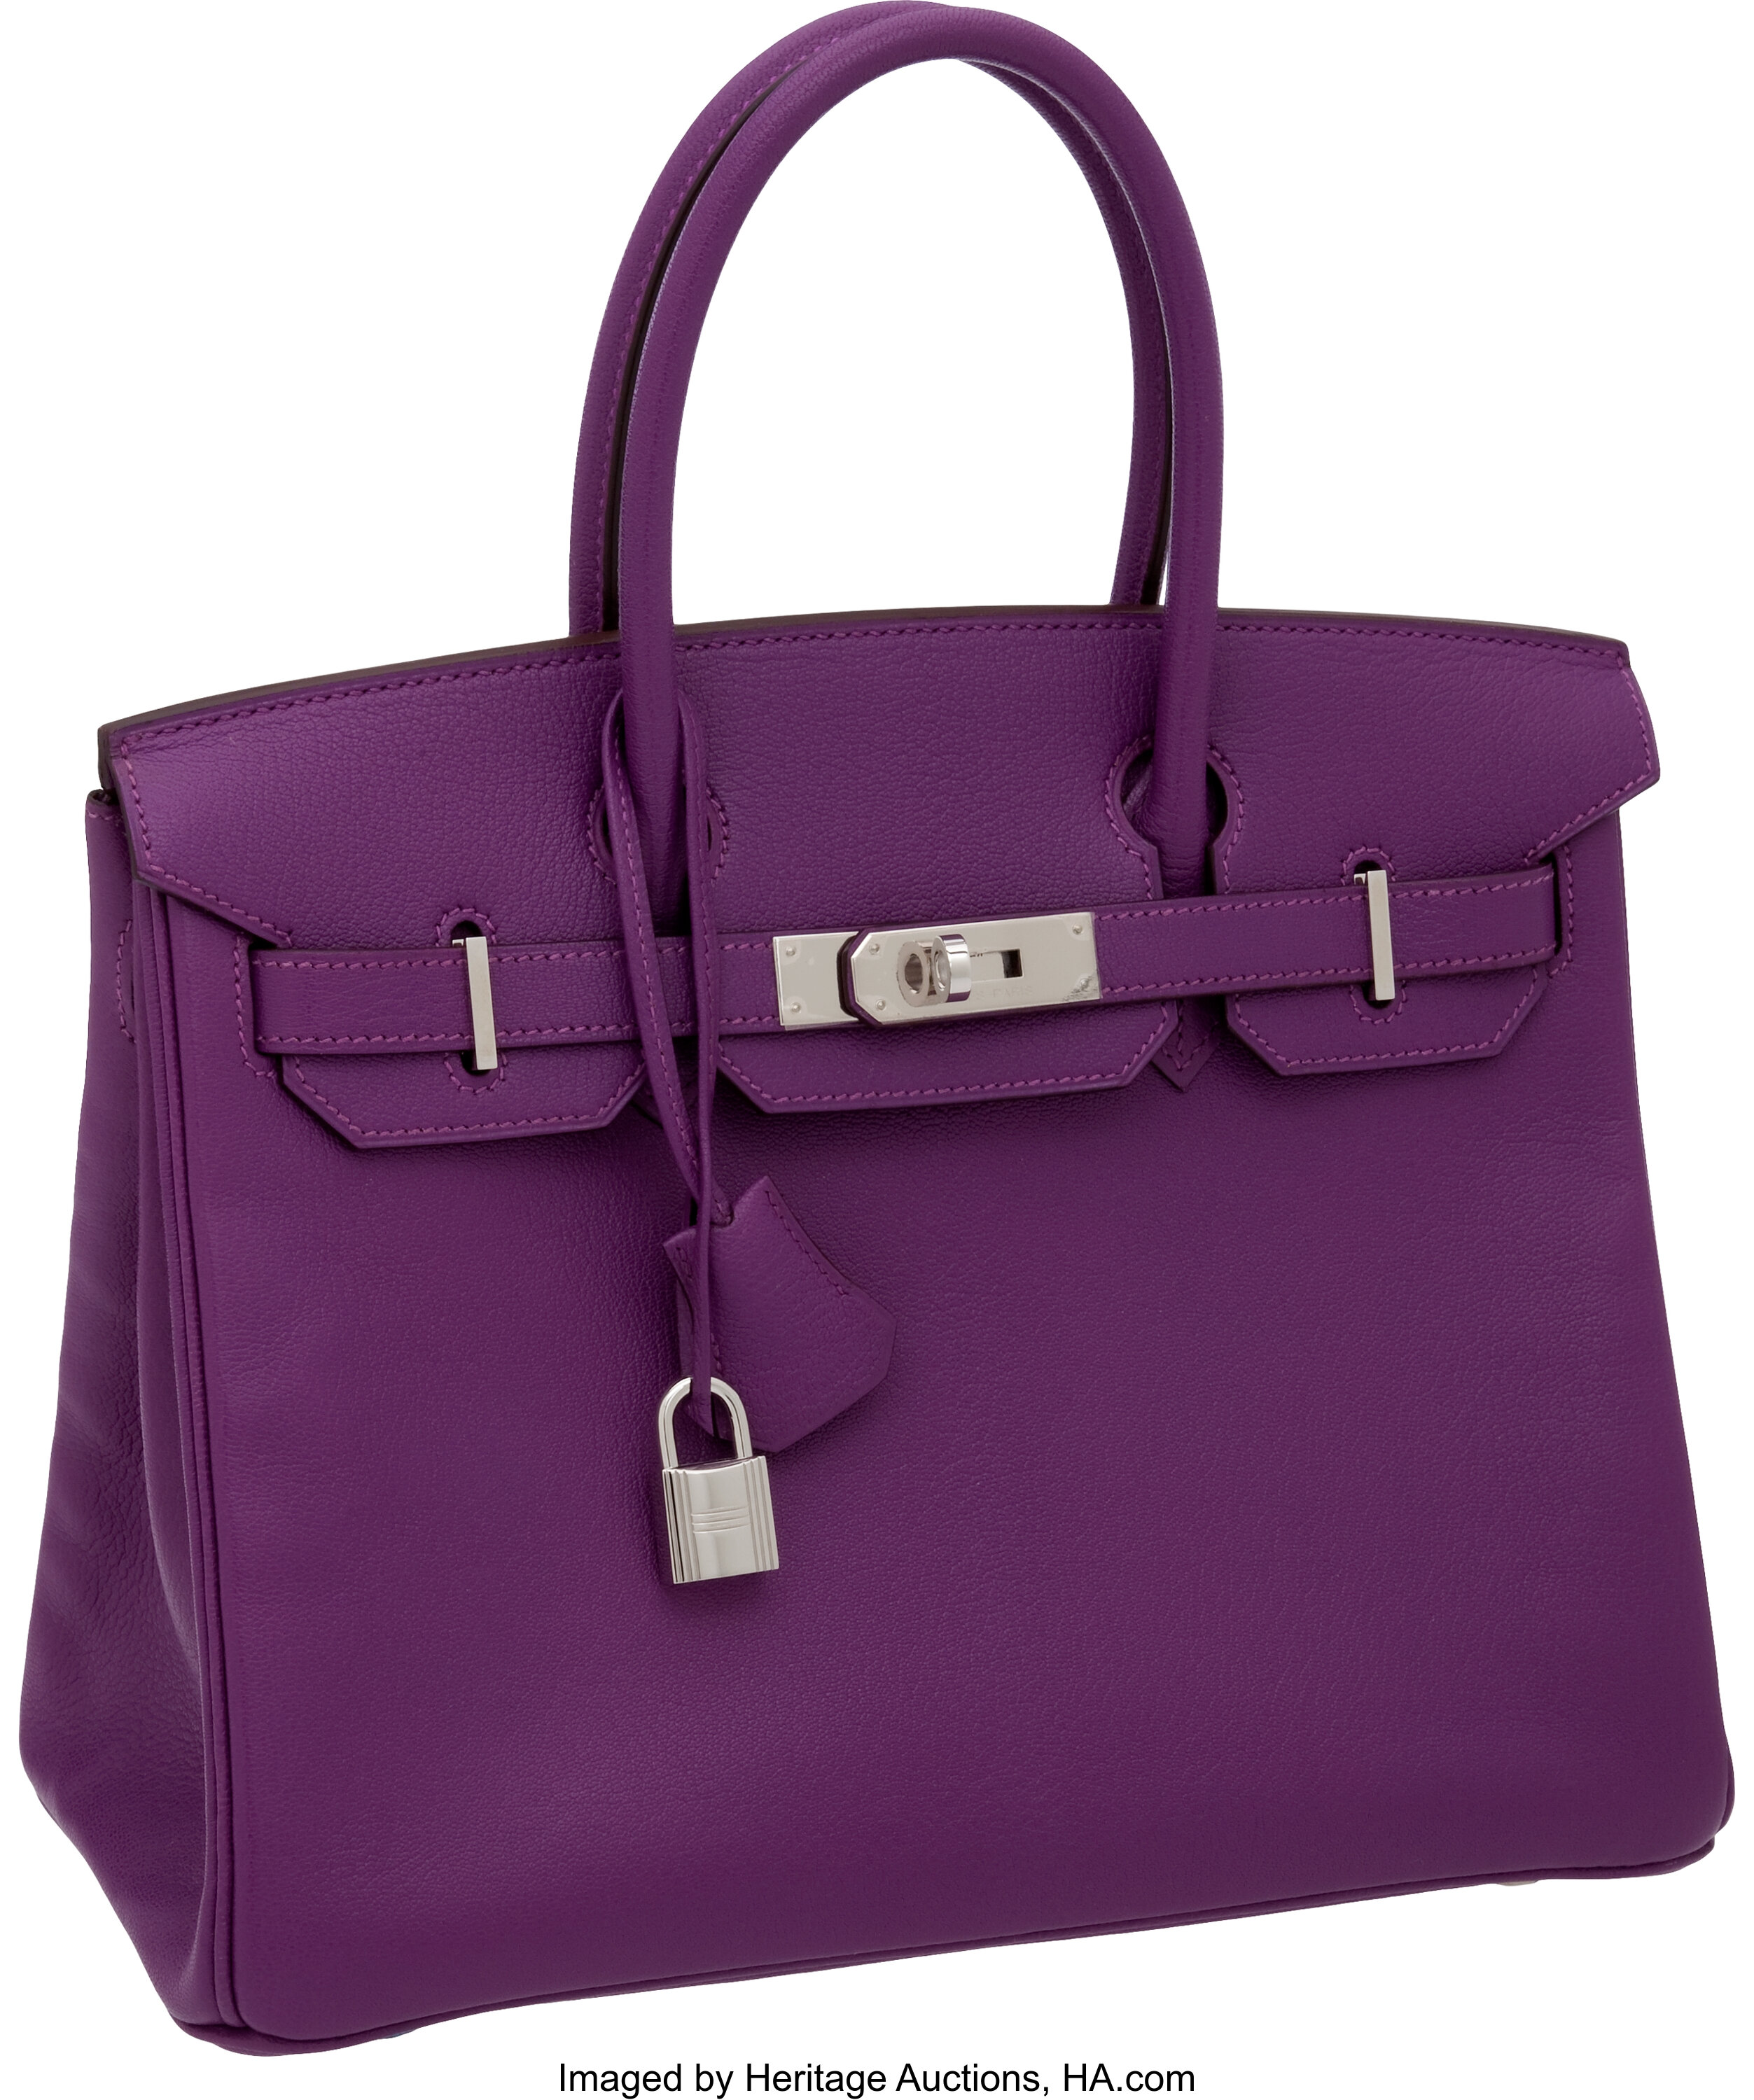 Hermes 30cm Violet Chevre Leather Birkin Bag with Palladium | Lot ...